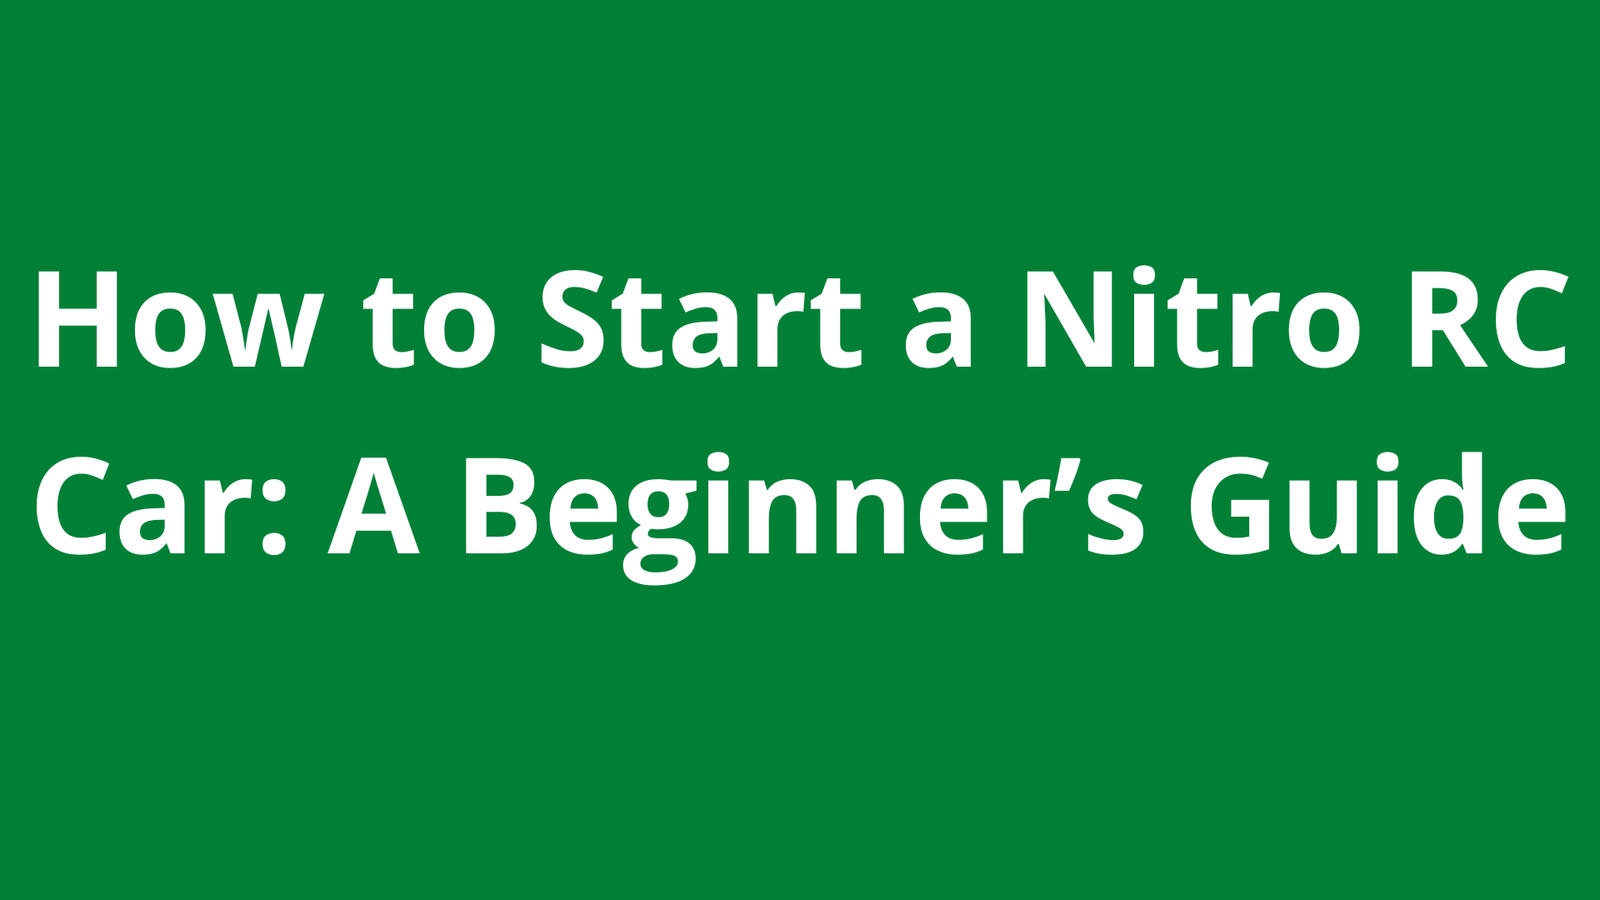 How to Start a Nitro RC Car